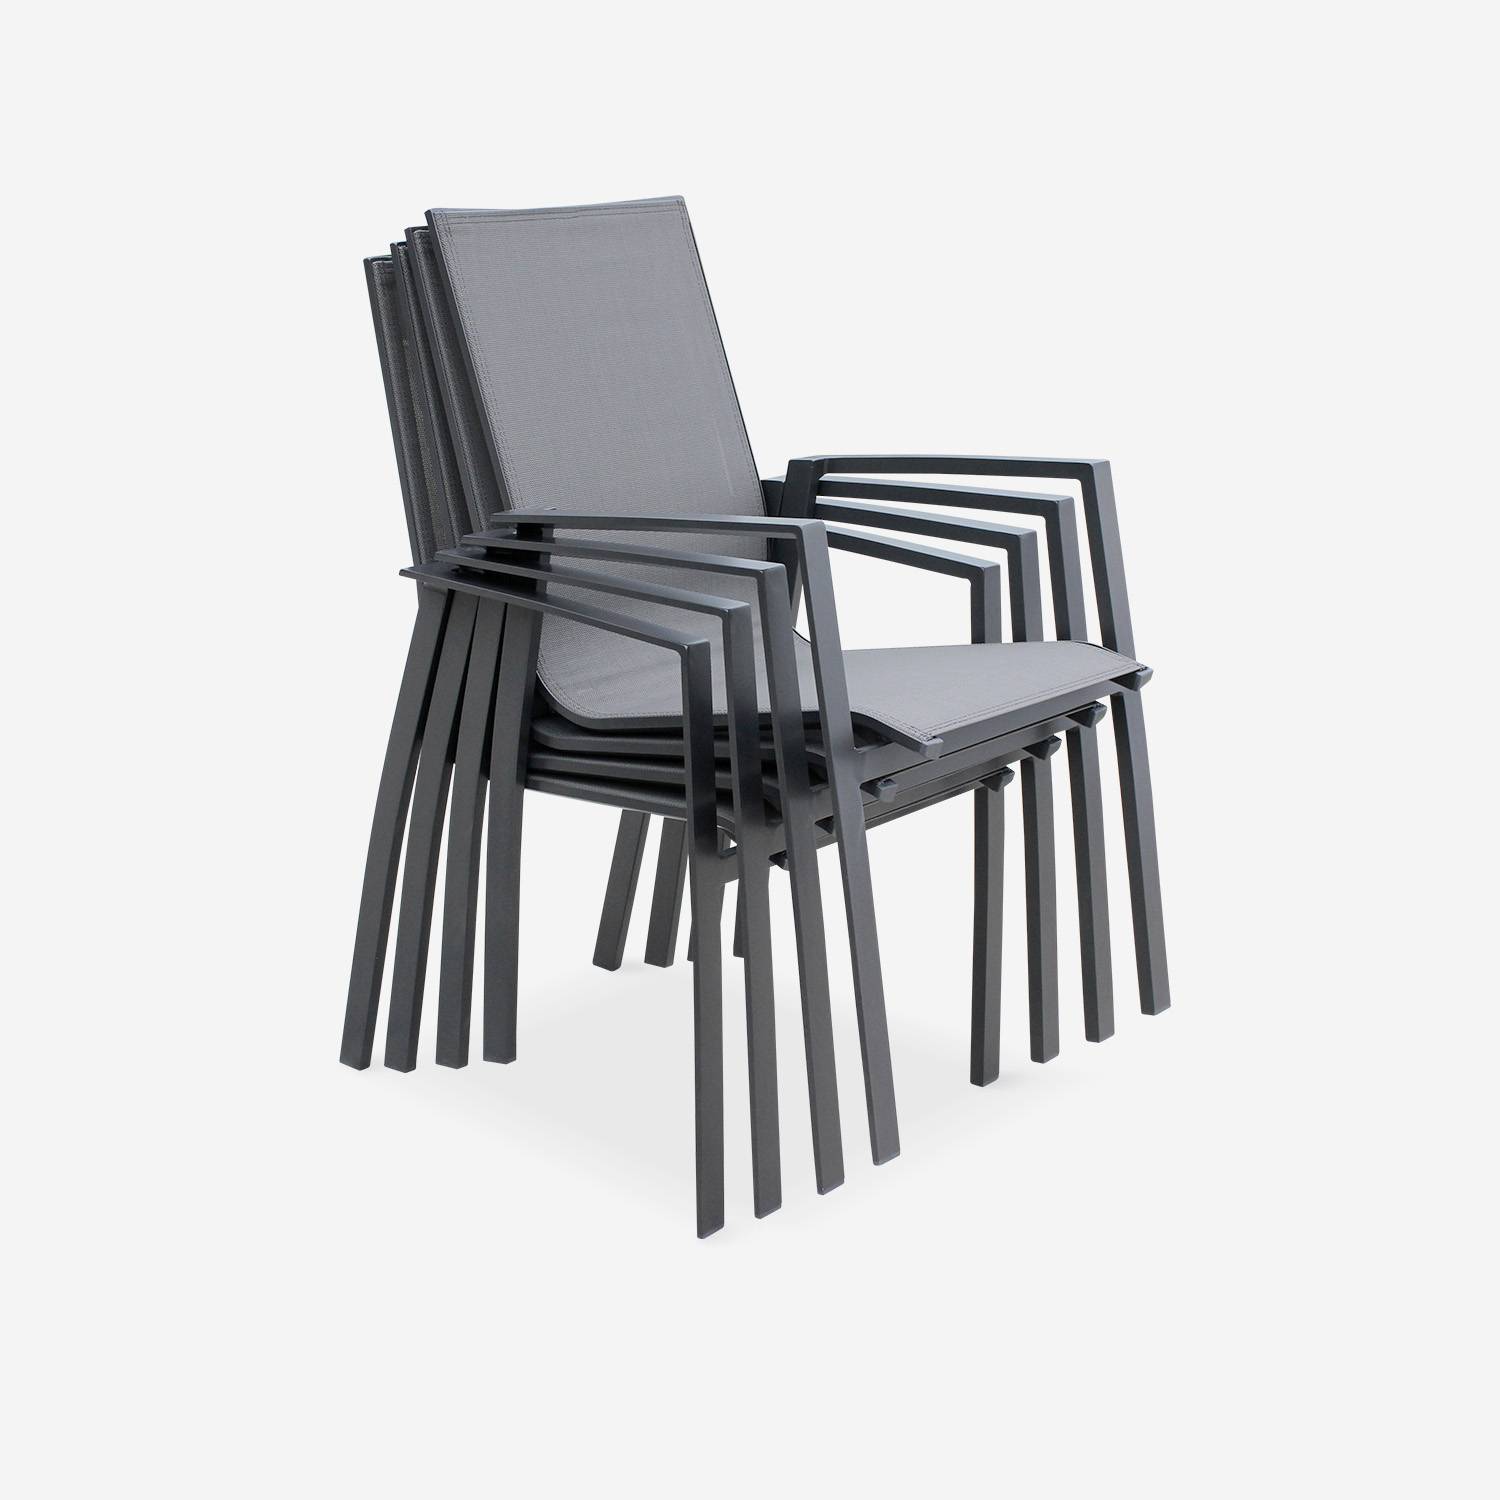 Juego de 2 sillas - Washington - Aluminio antracita y textileno gris oscuro, apilables,sweeek,Photo3